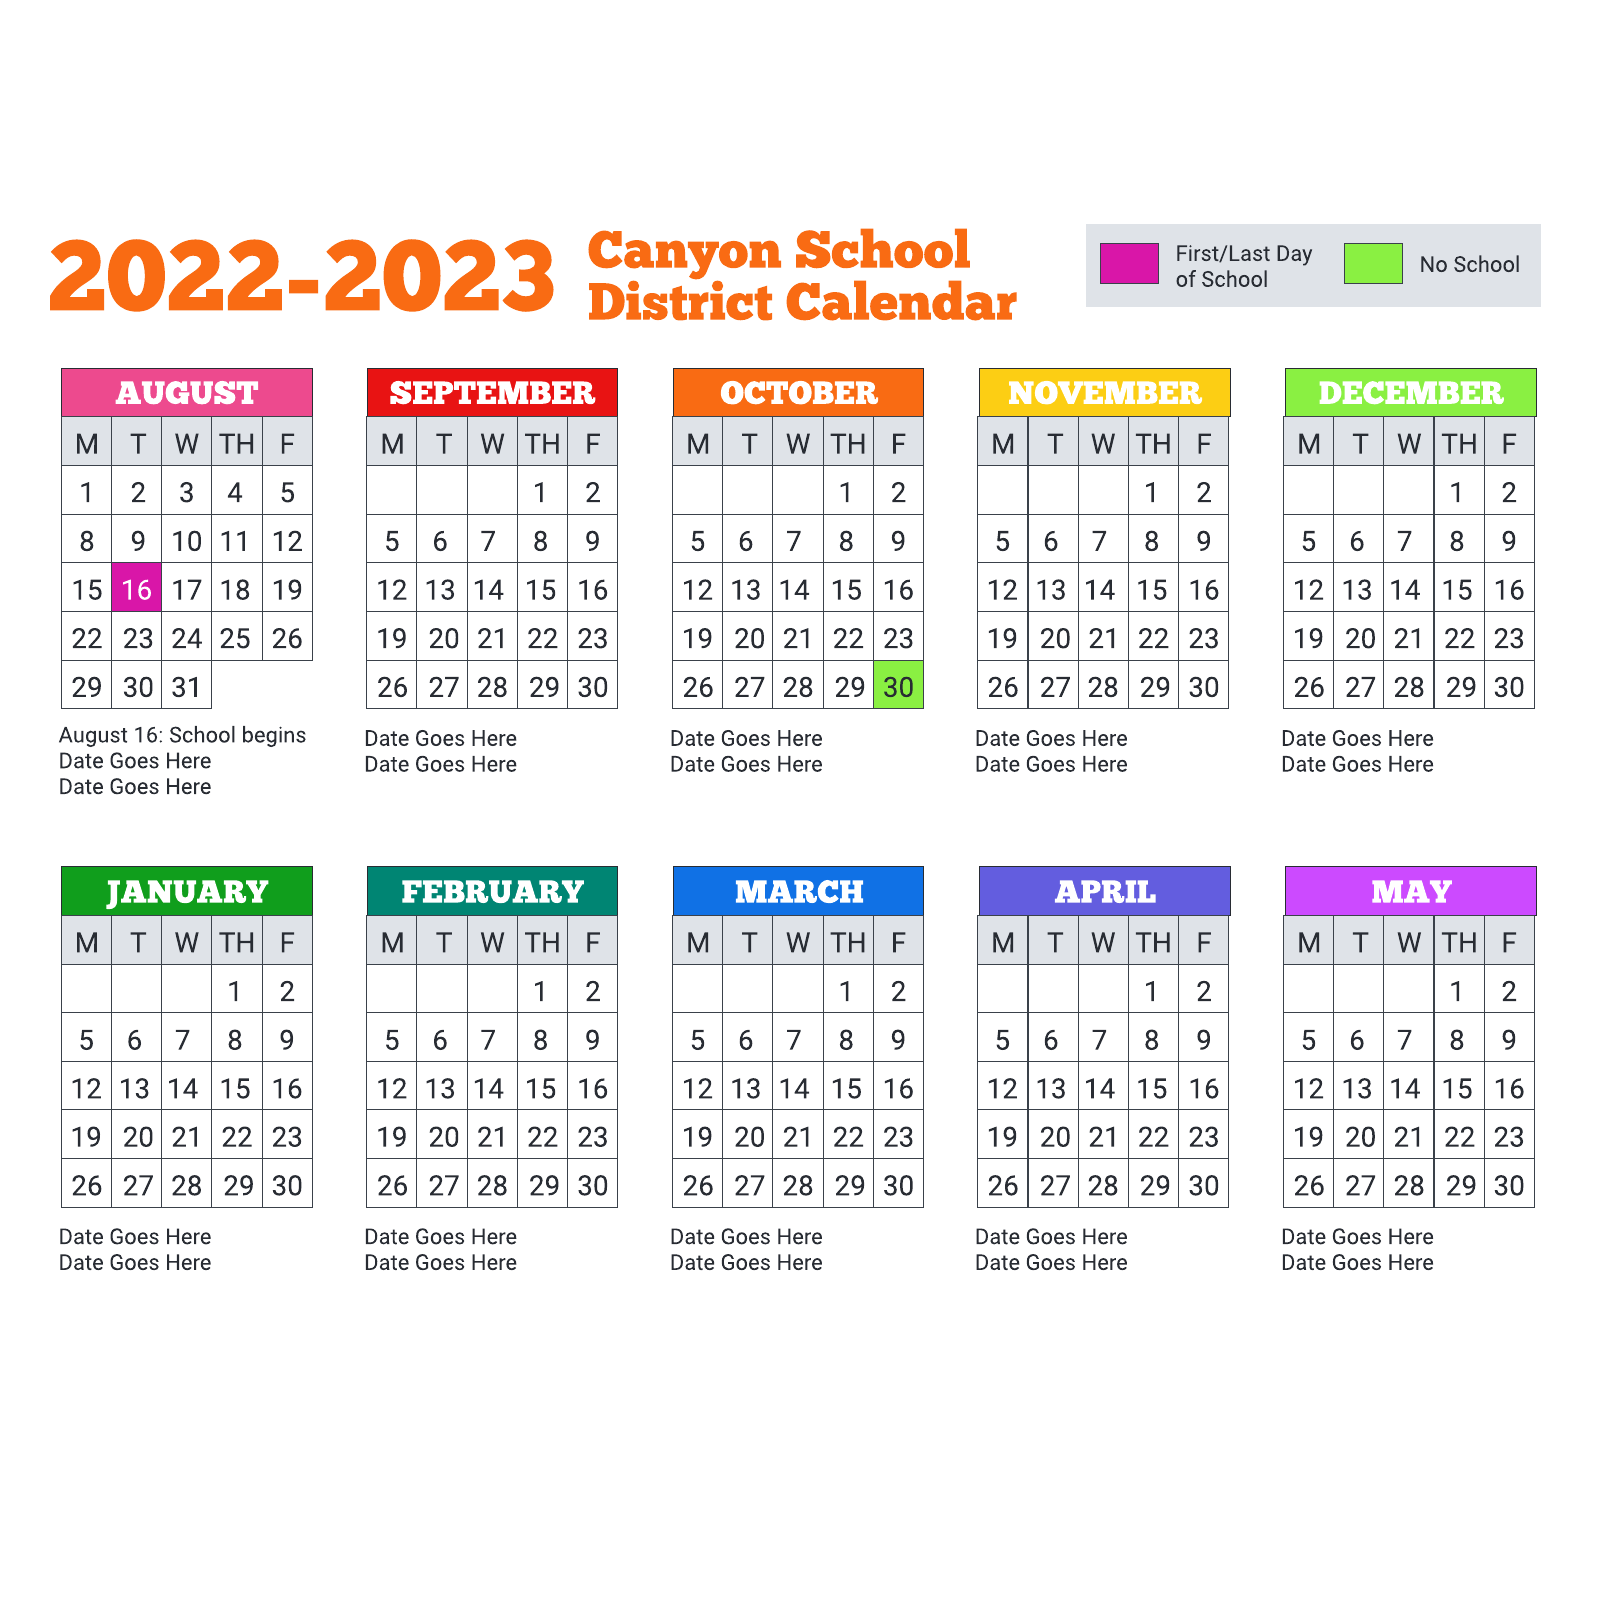 School district calendar example